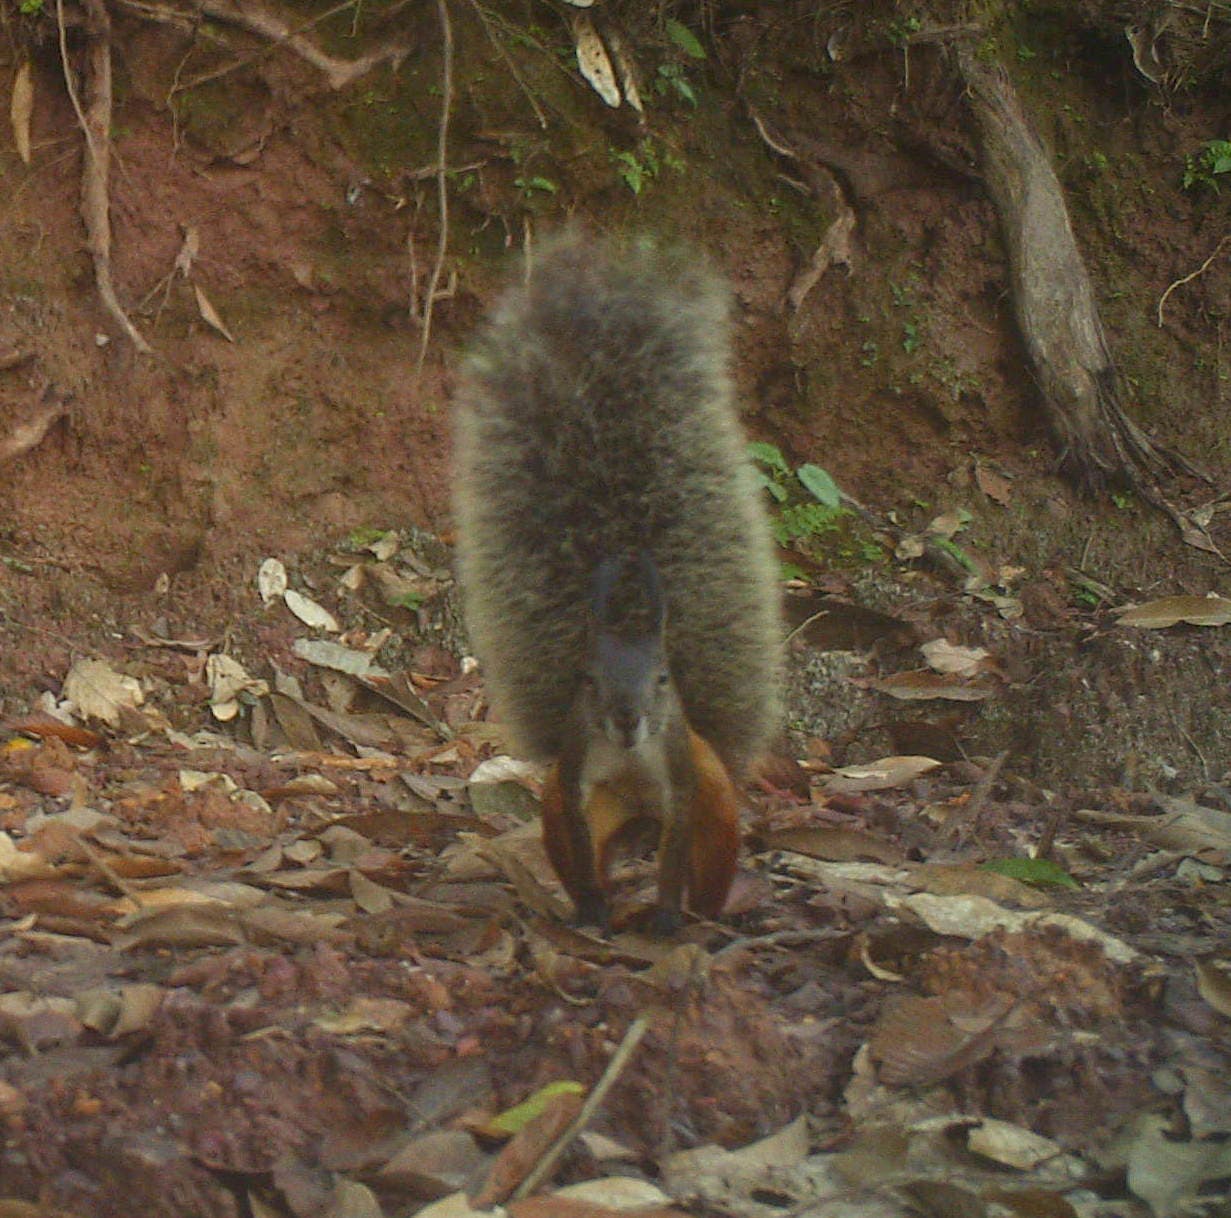 Das Borneo-Hörnchen (Rheithrosciurus macrotis)